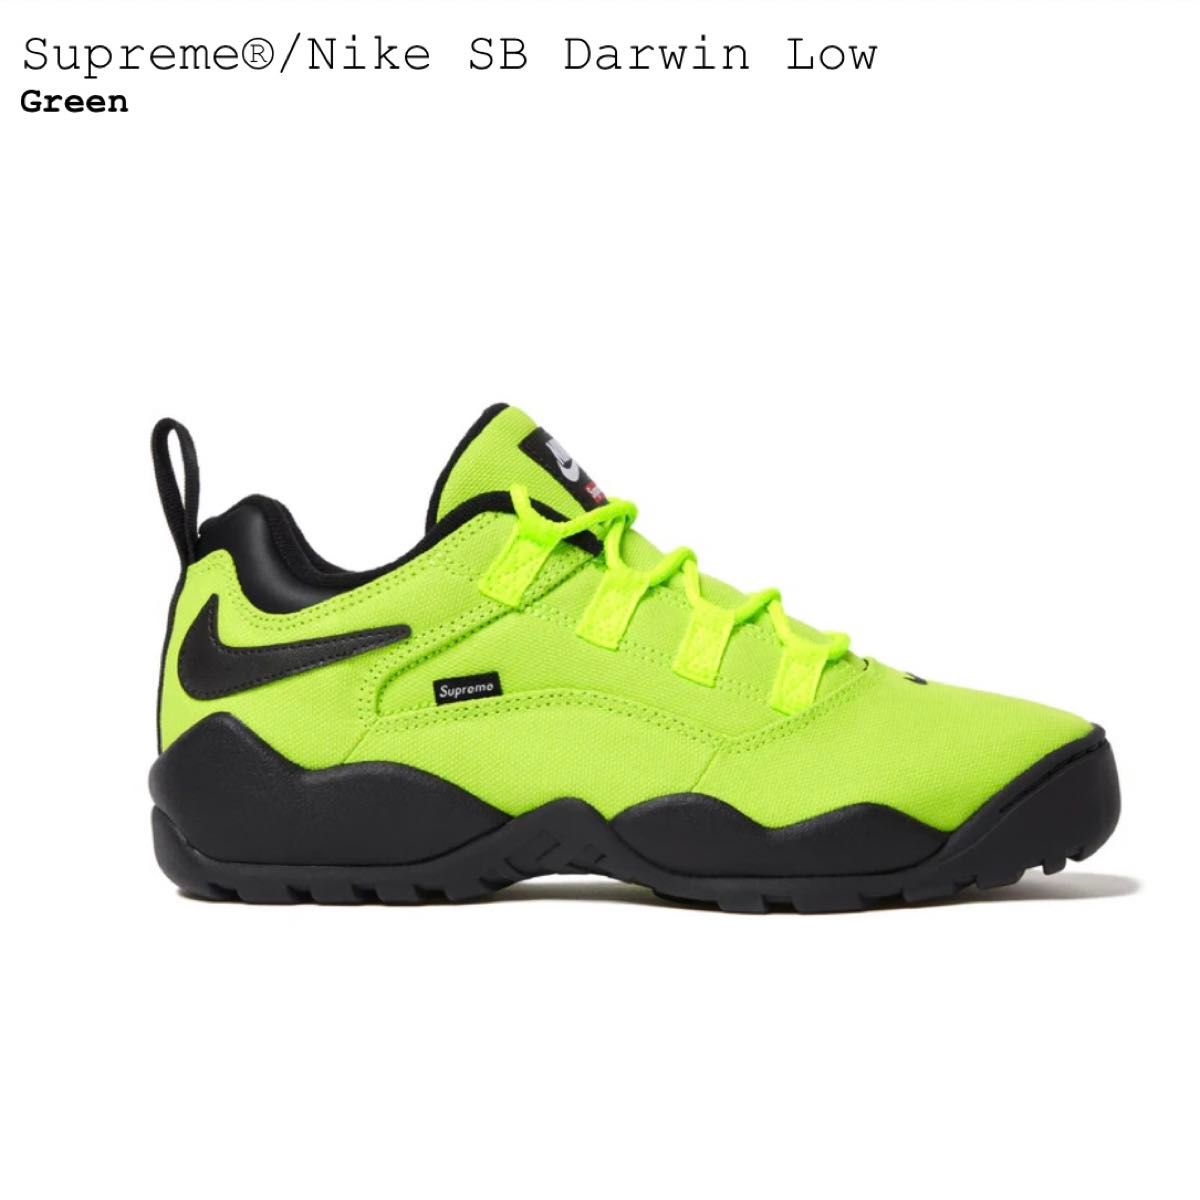 Supreme × Nike SB Darwin Low Green 28cm スニーカー ダーウィン US10